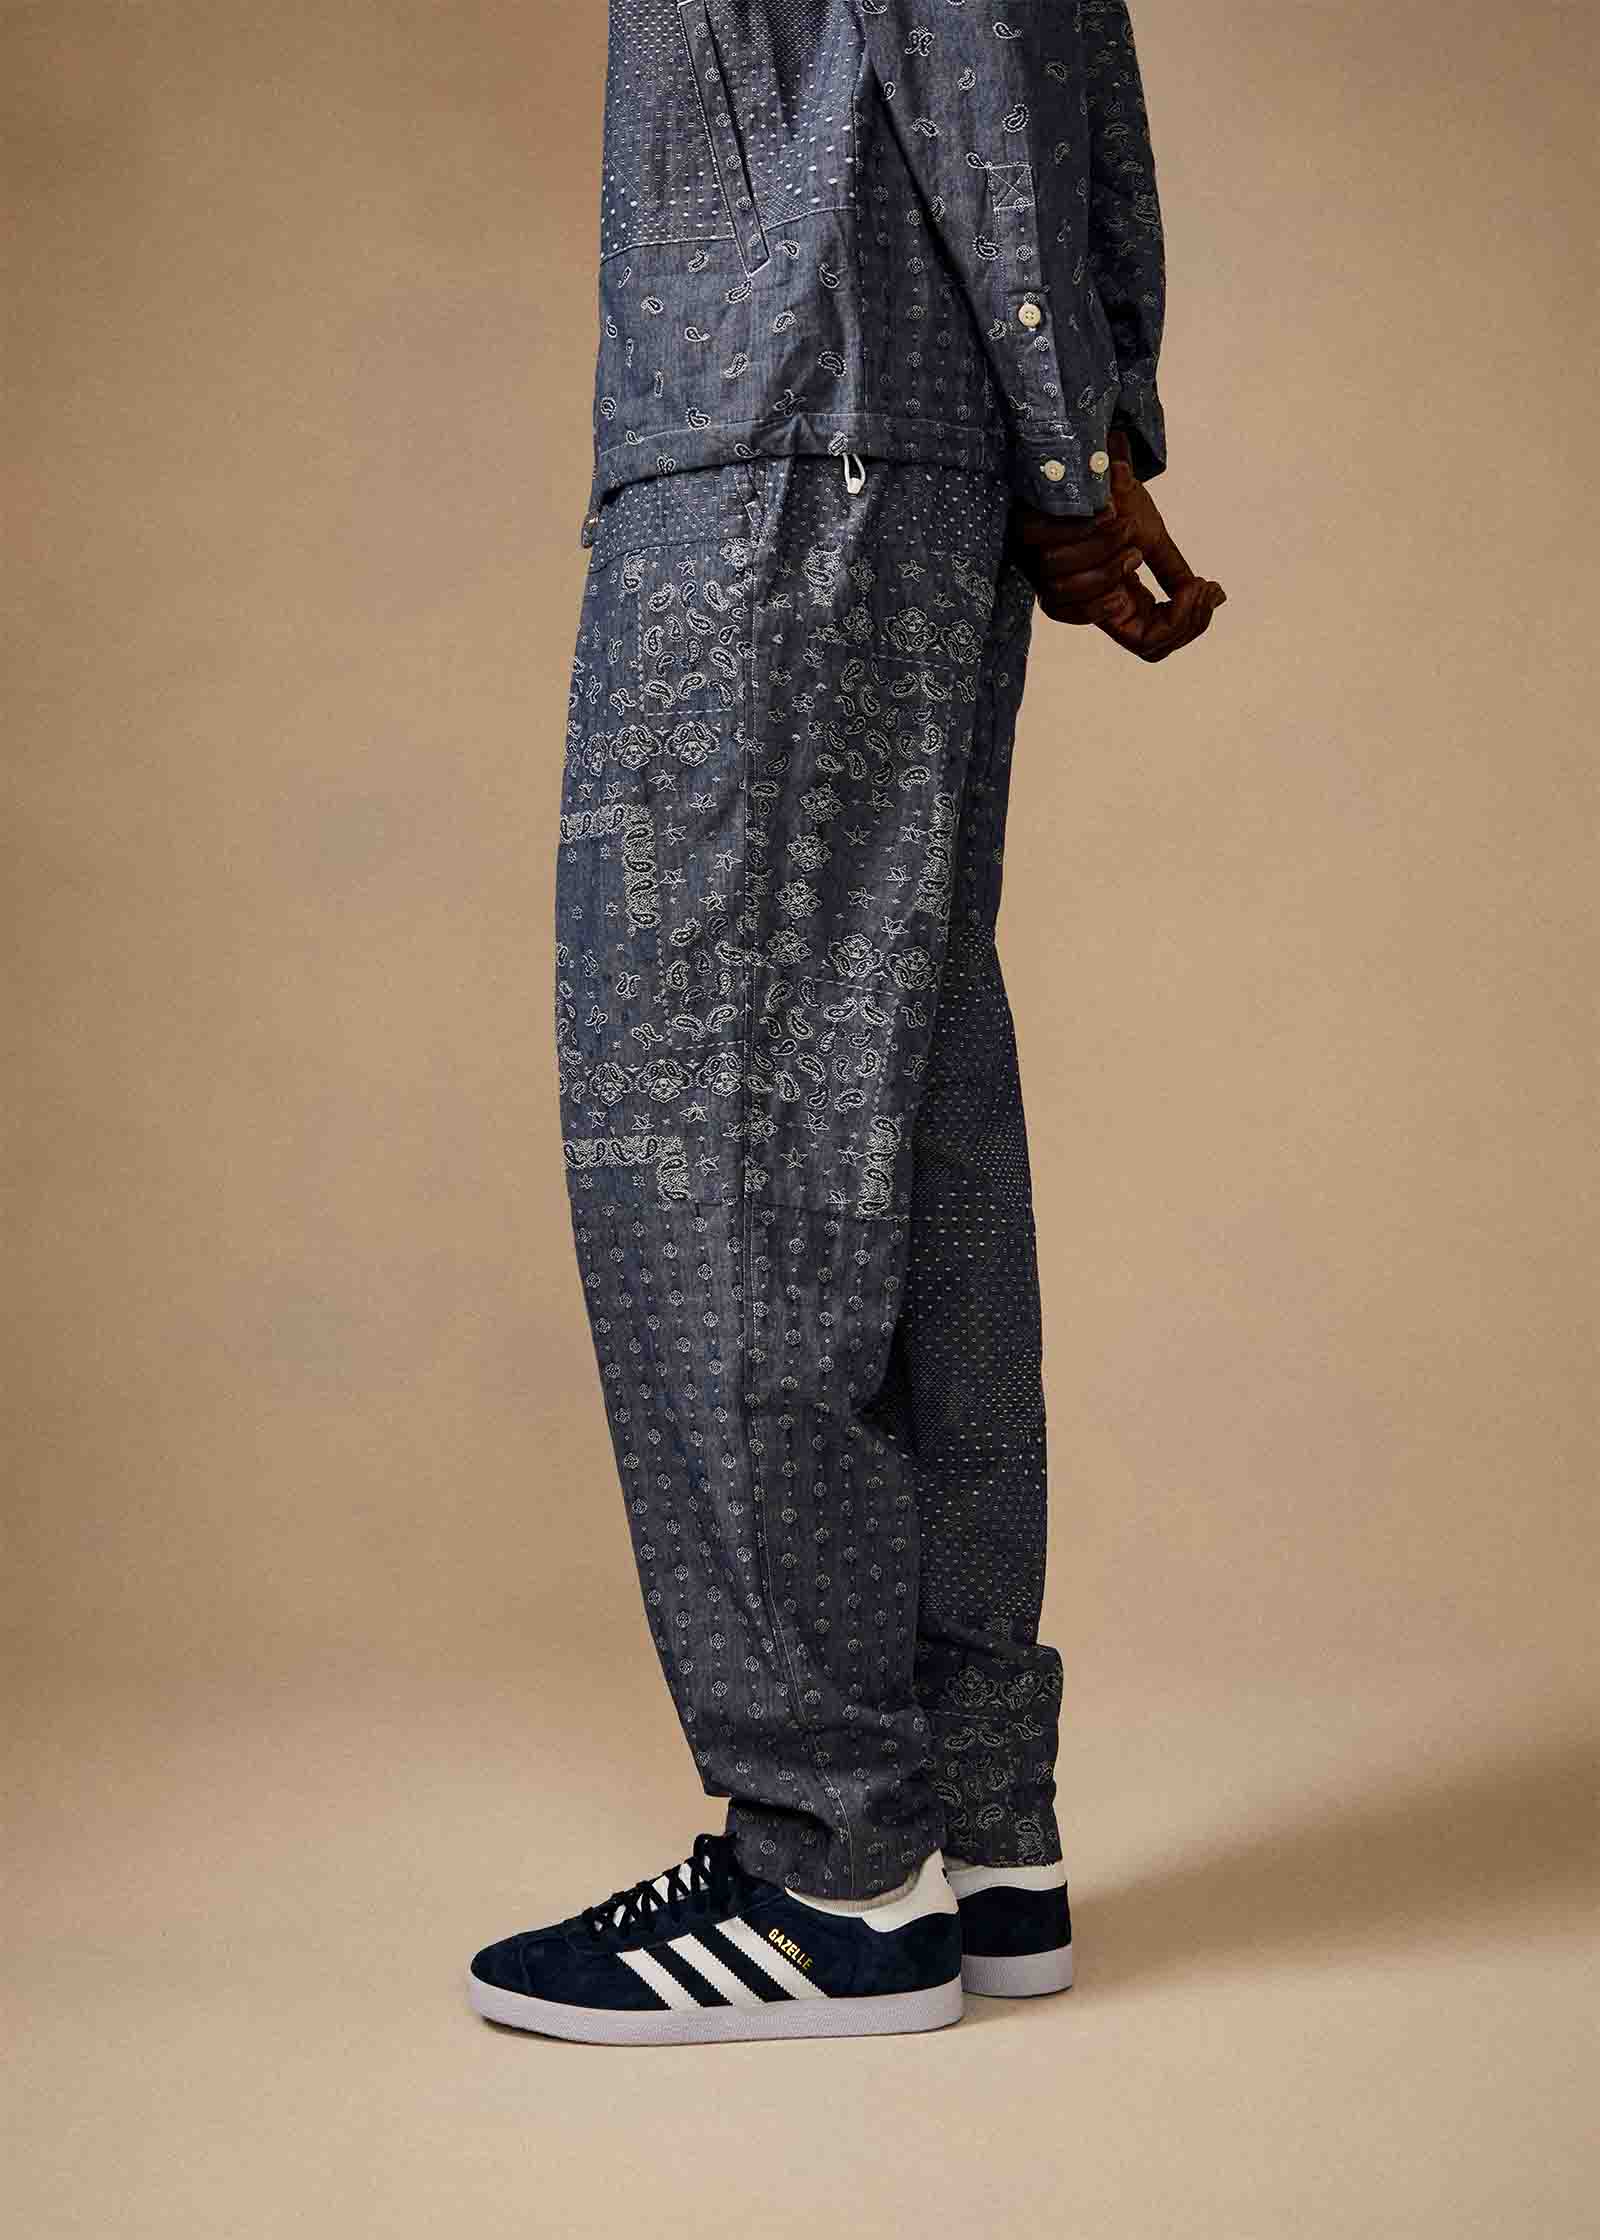 Louis Vuitton Supreme Jacquard Pajama Set